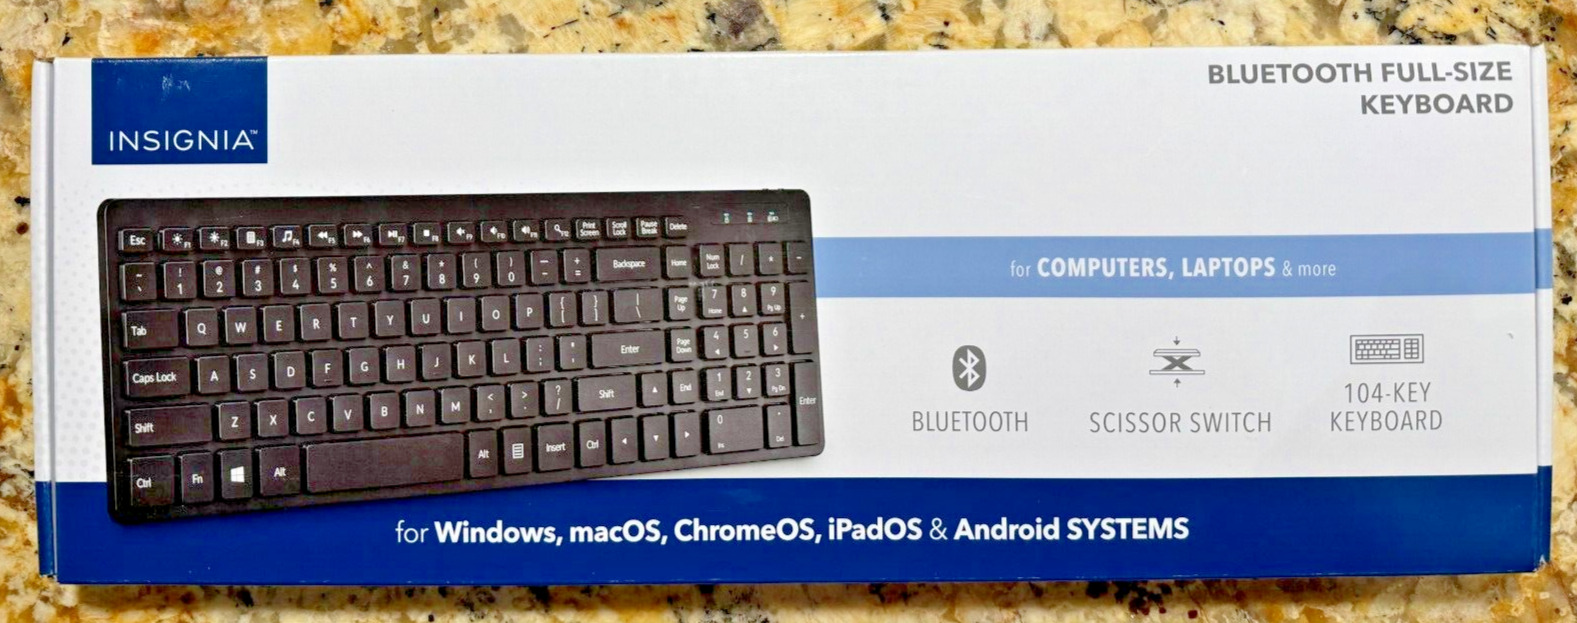 Insignia Full-size Bluetooth Scissor Switch Keyboard - Black